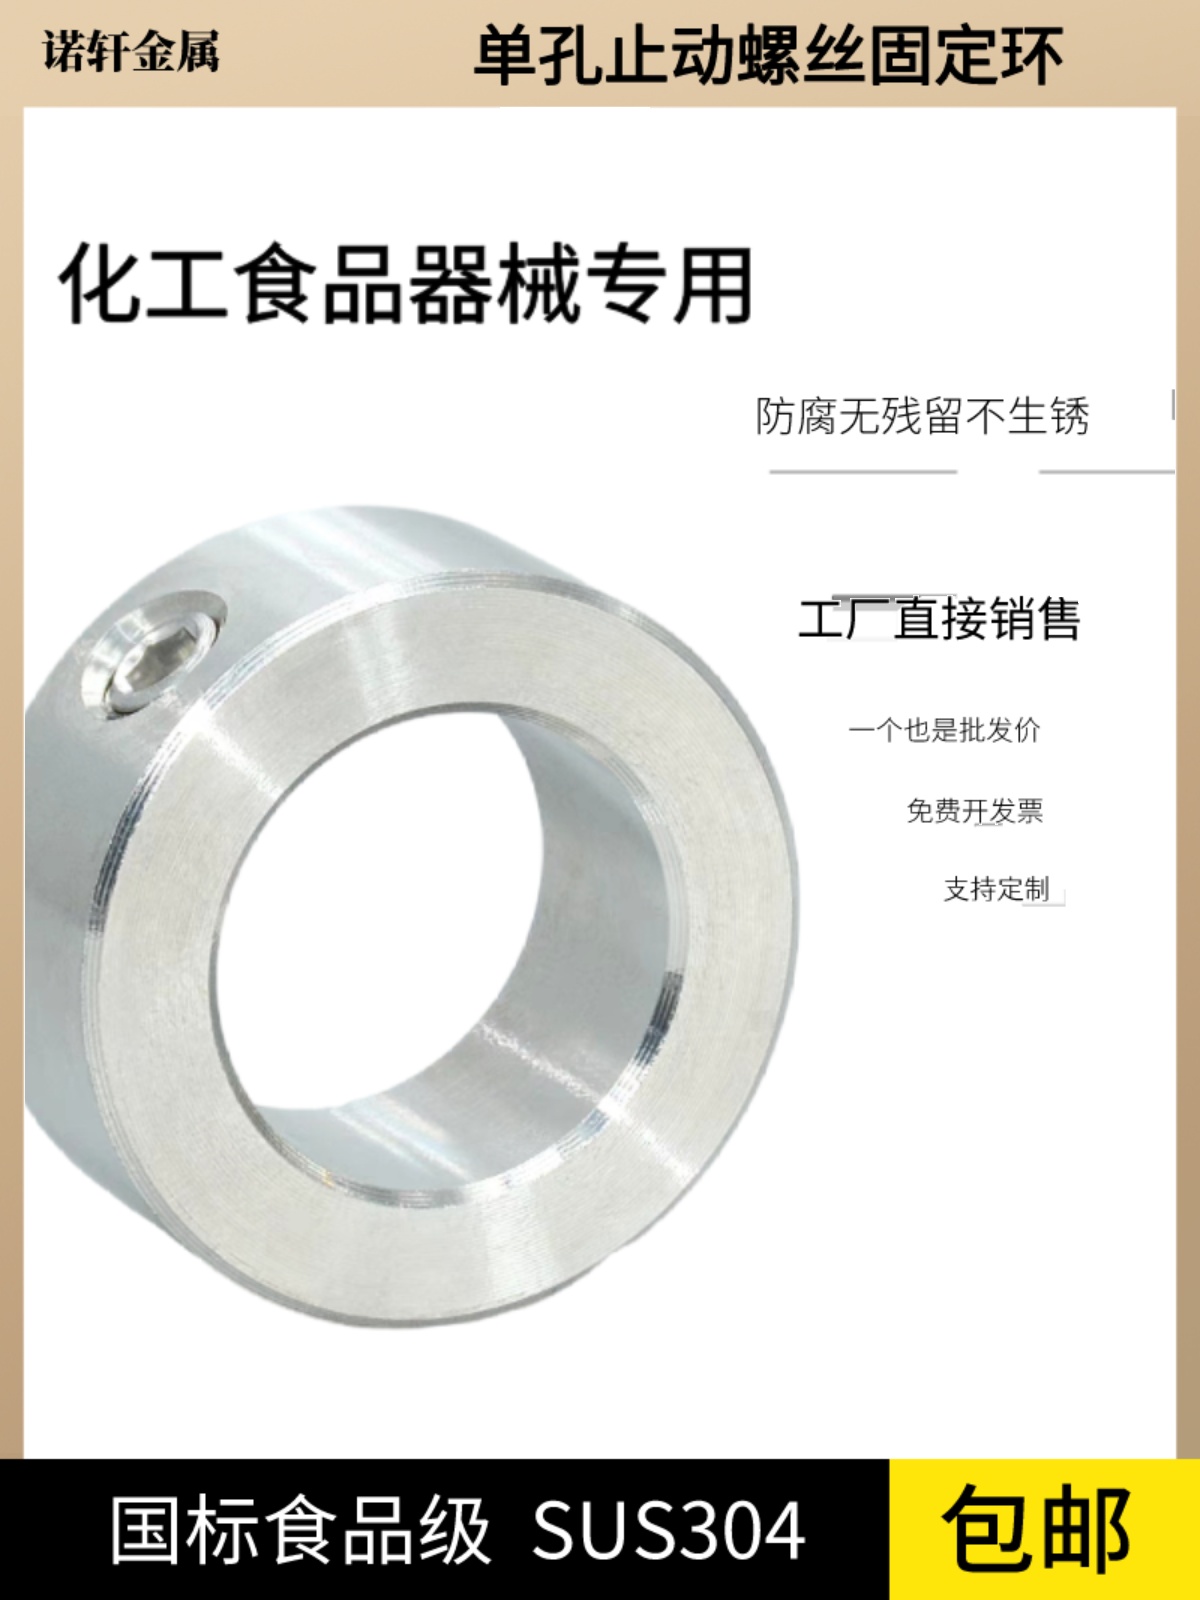 GDZS不锈钢单孔顶丝固定环光轴调节环止推环光轴固定环钻头限位环